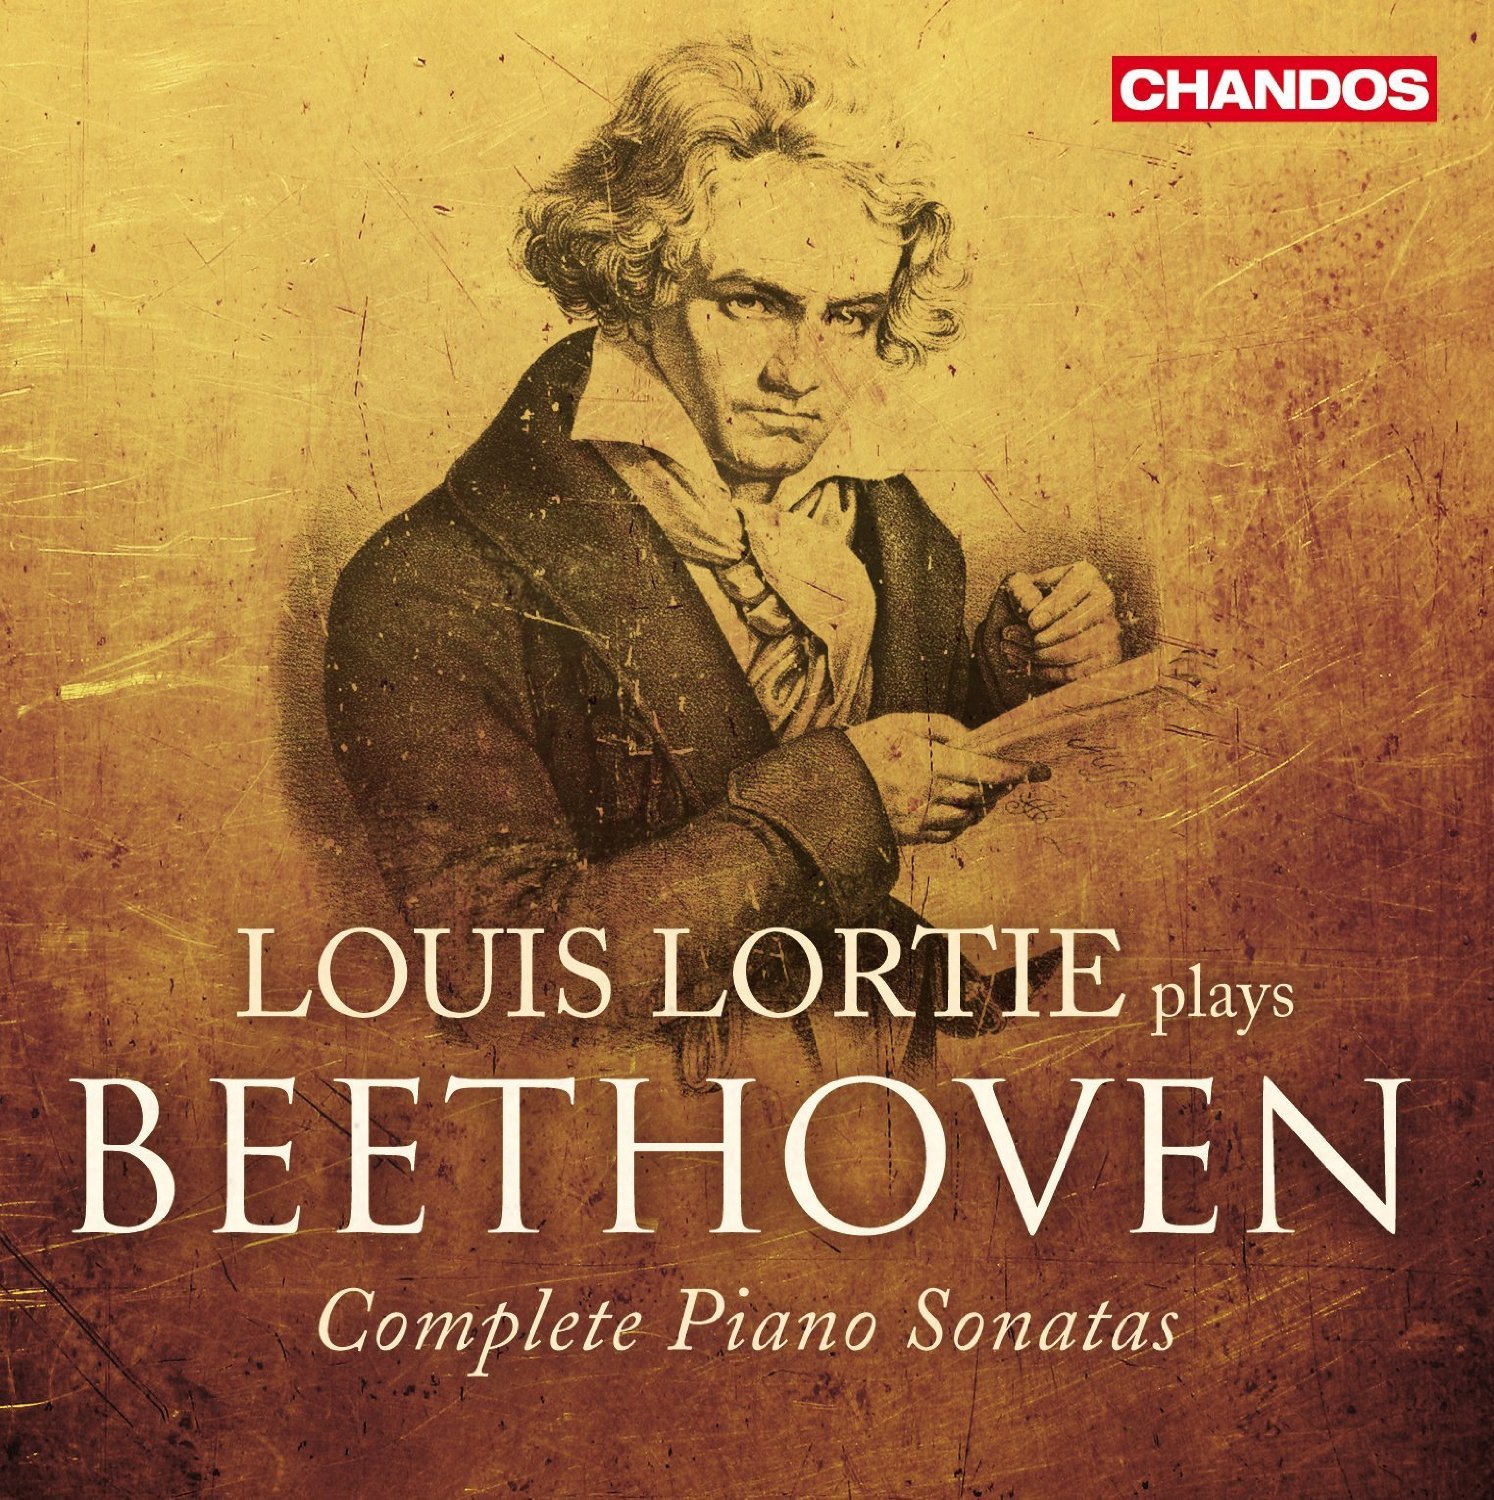 Louis Lorte Beethoven album cover